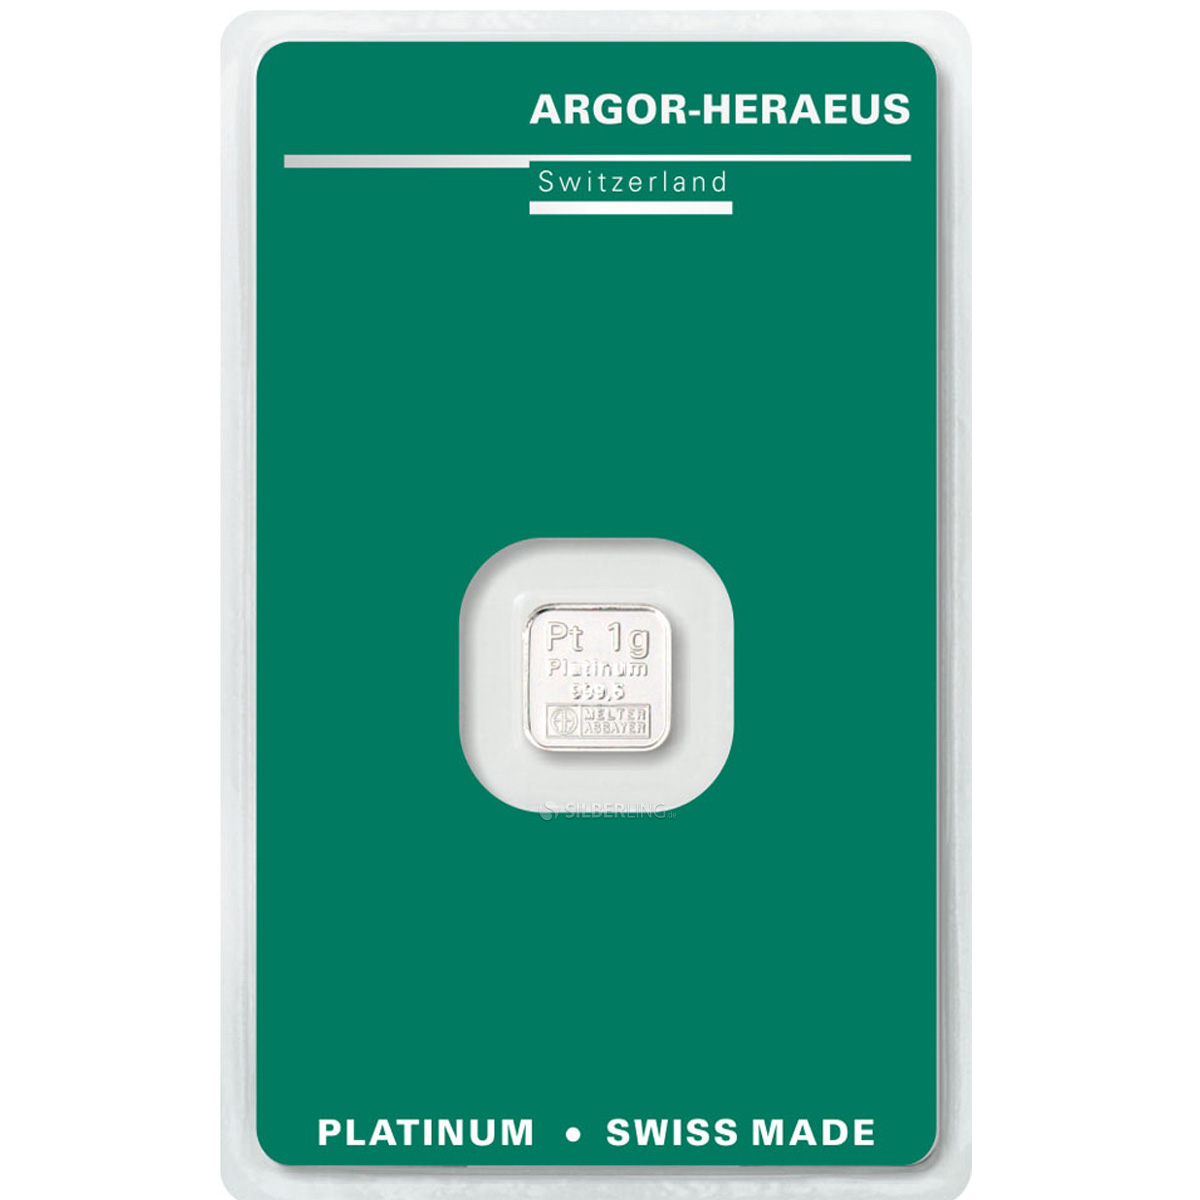 Platinum Bar 1 Gram Argor-Hereaus - buy it here